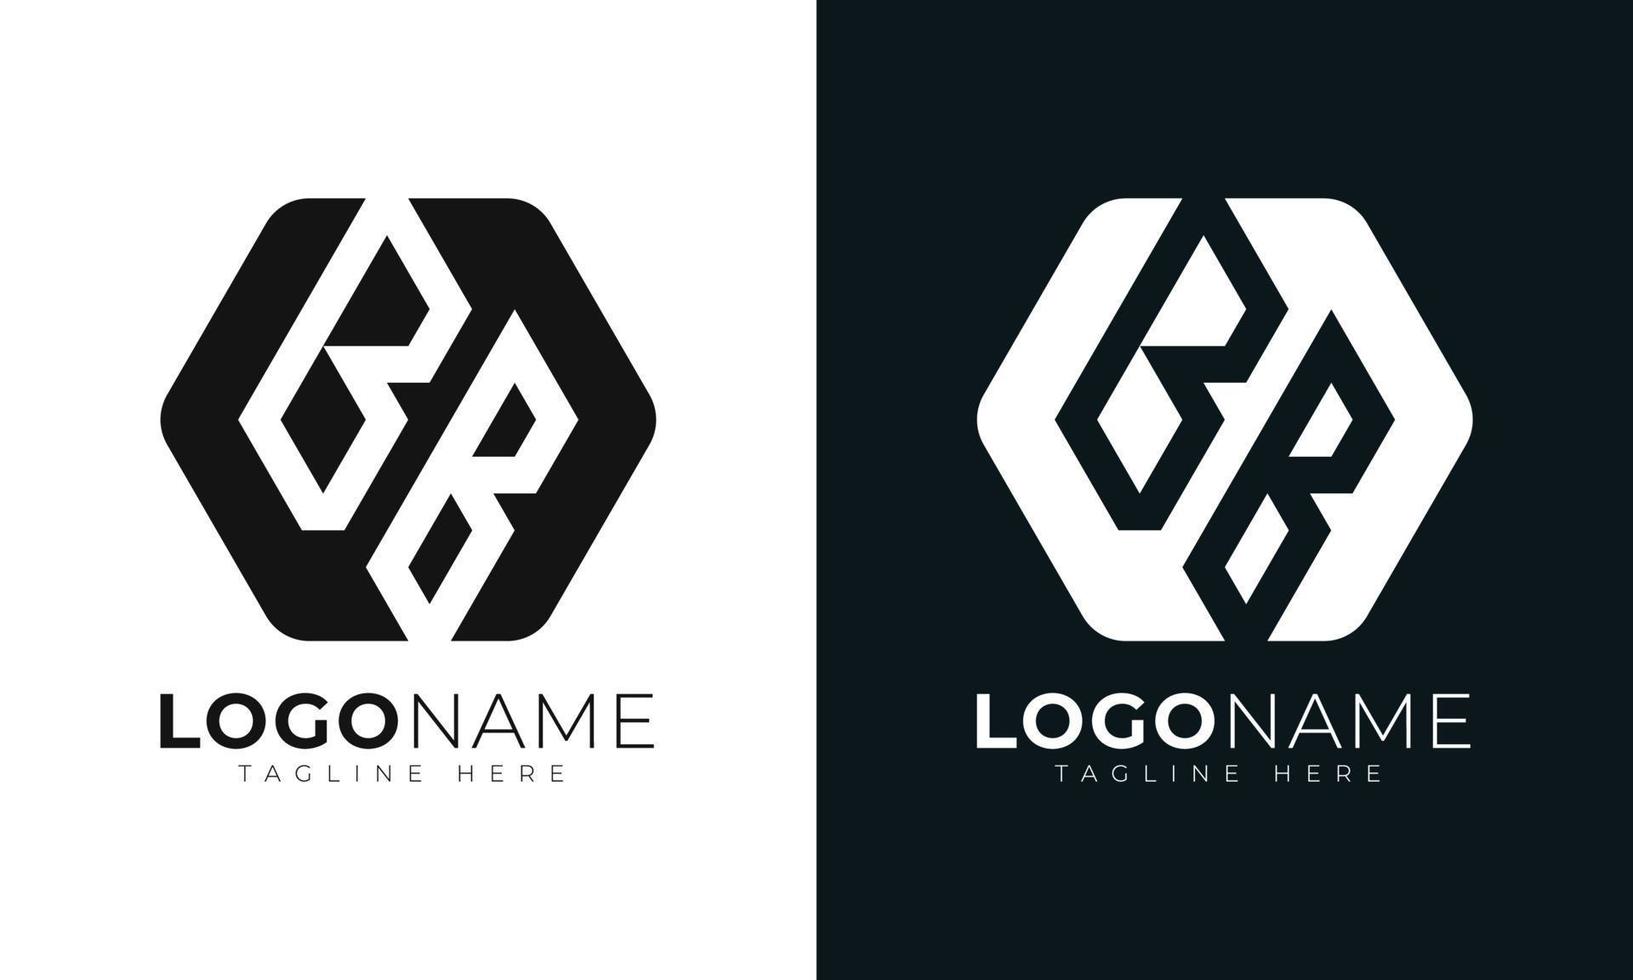 modelo de design de vetor de logotipo de letra inicial b. com formato hexagonal. estilo poligonal.